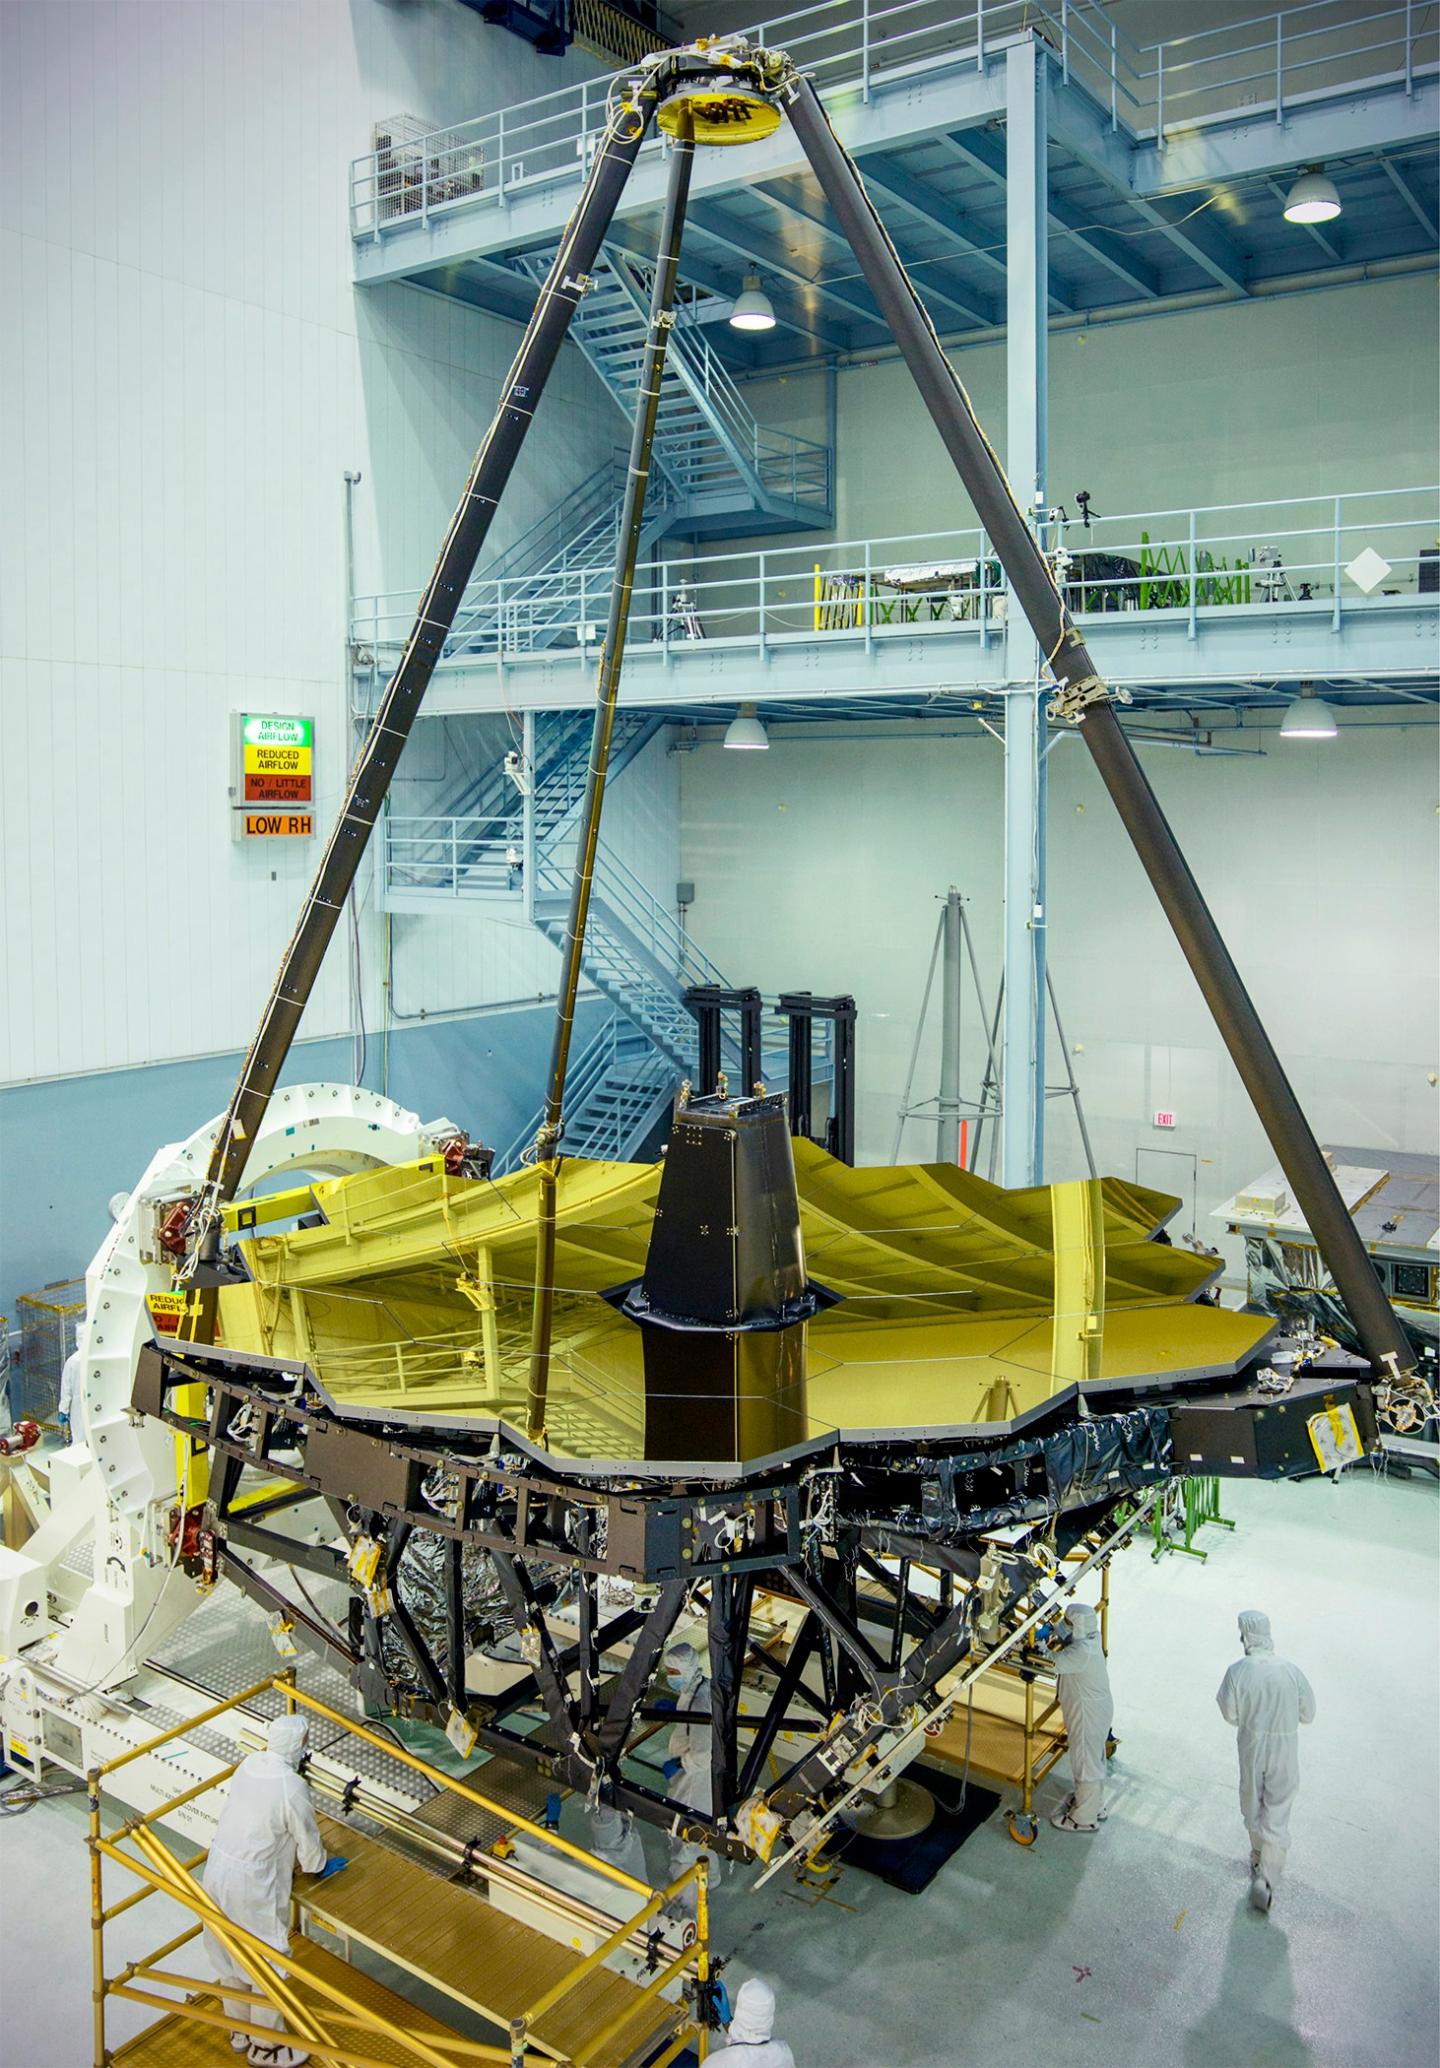 NASA's James Webb Space Telescope primary mirror unveiled